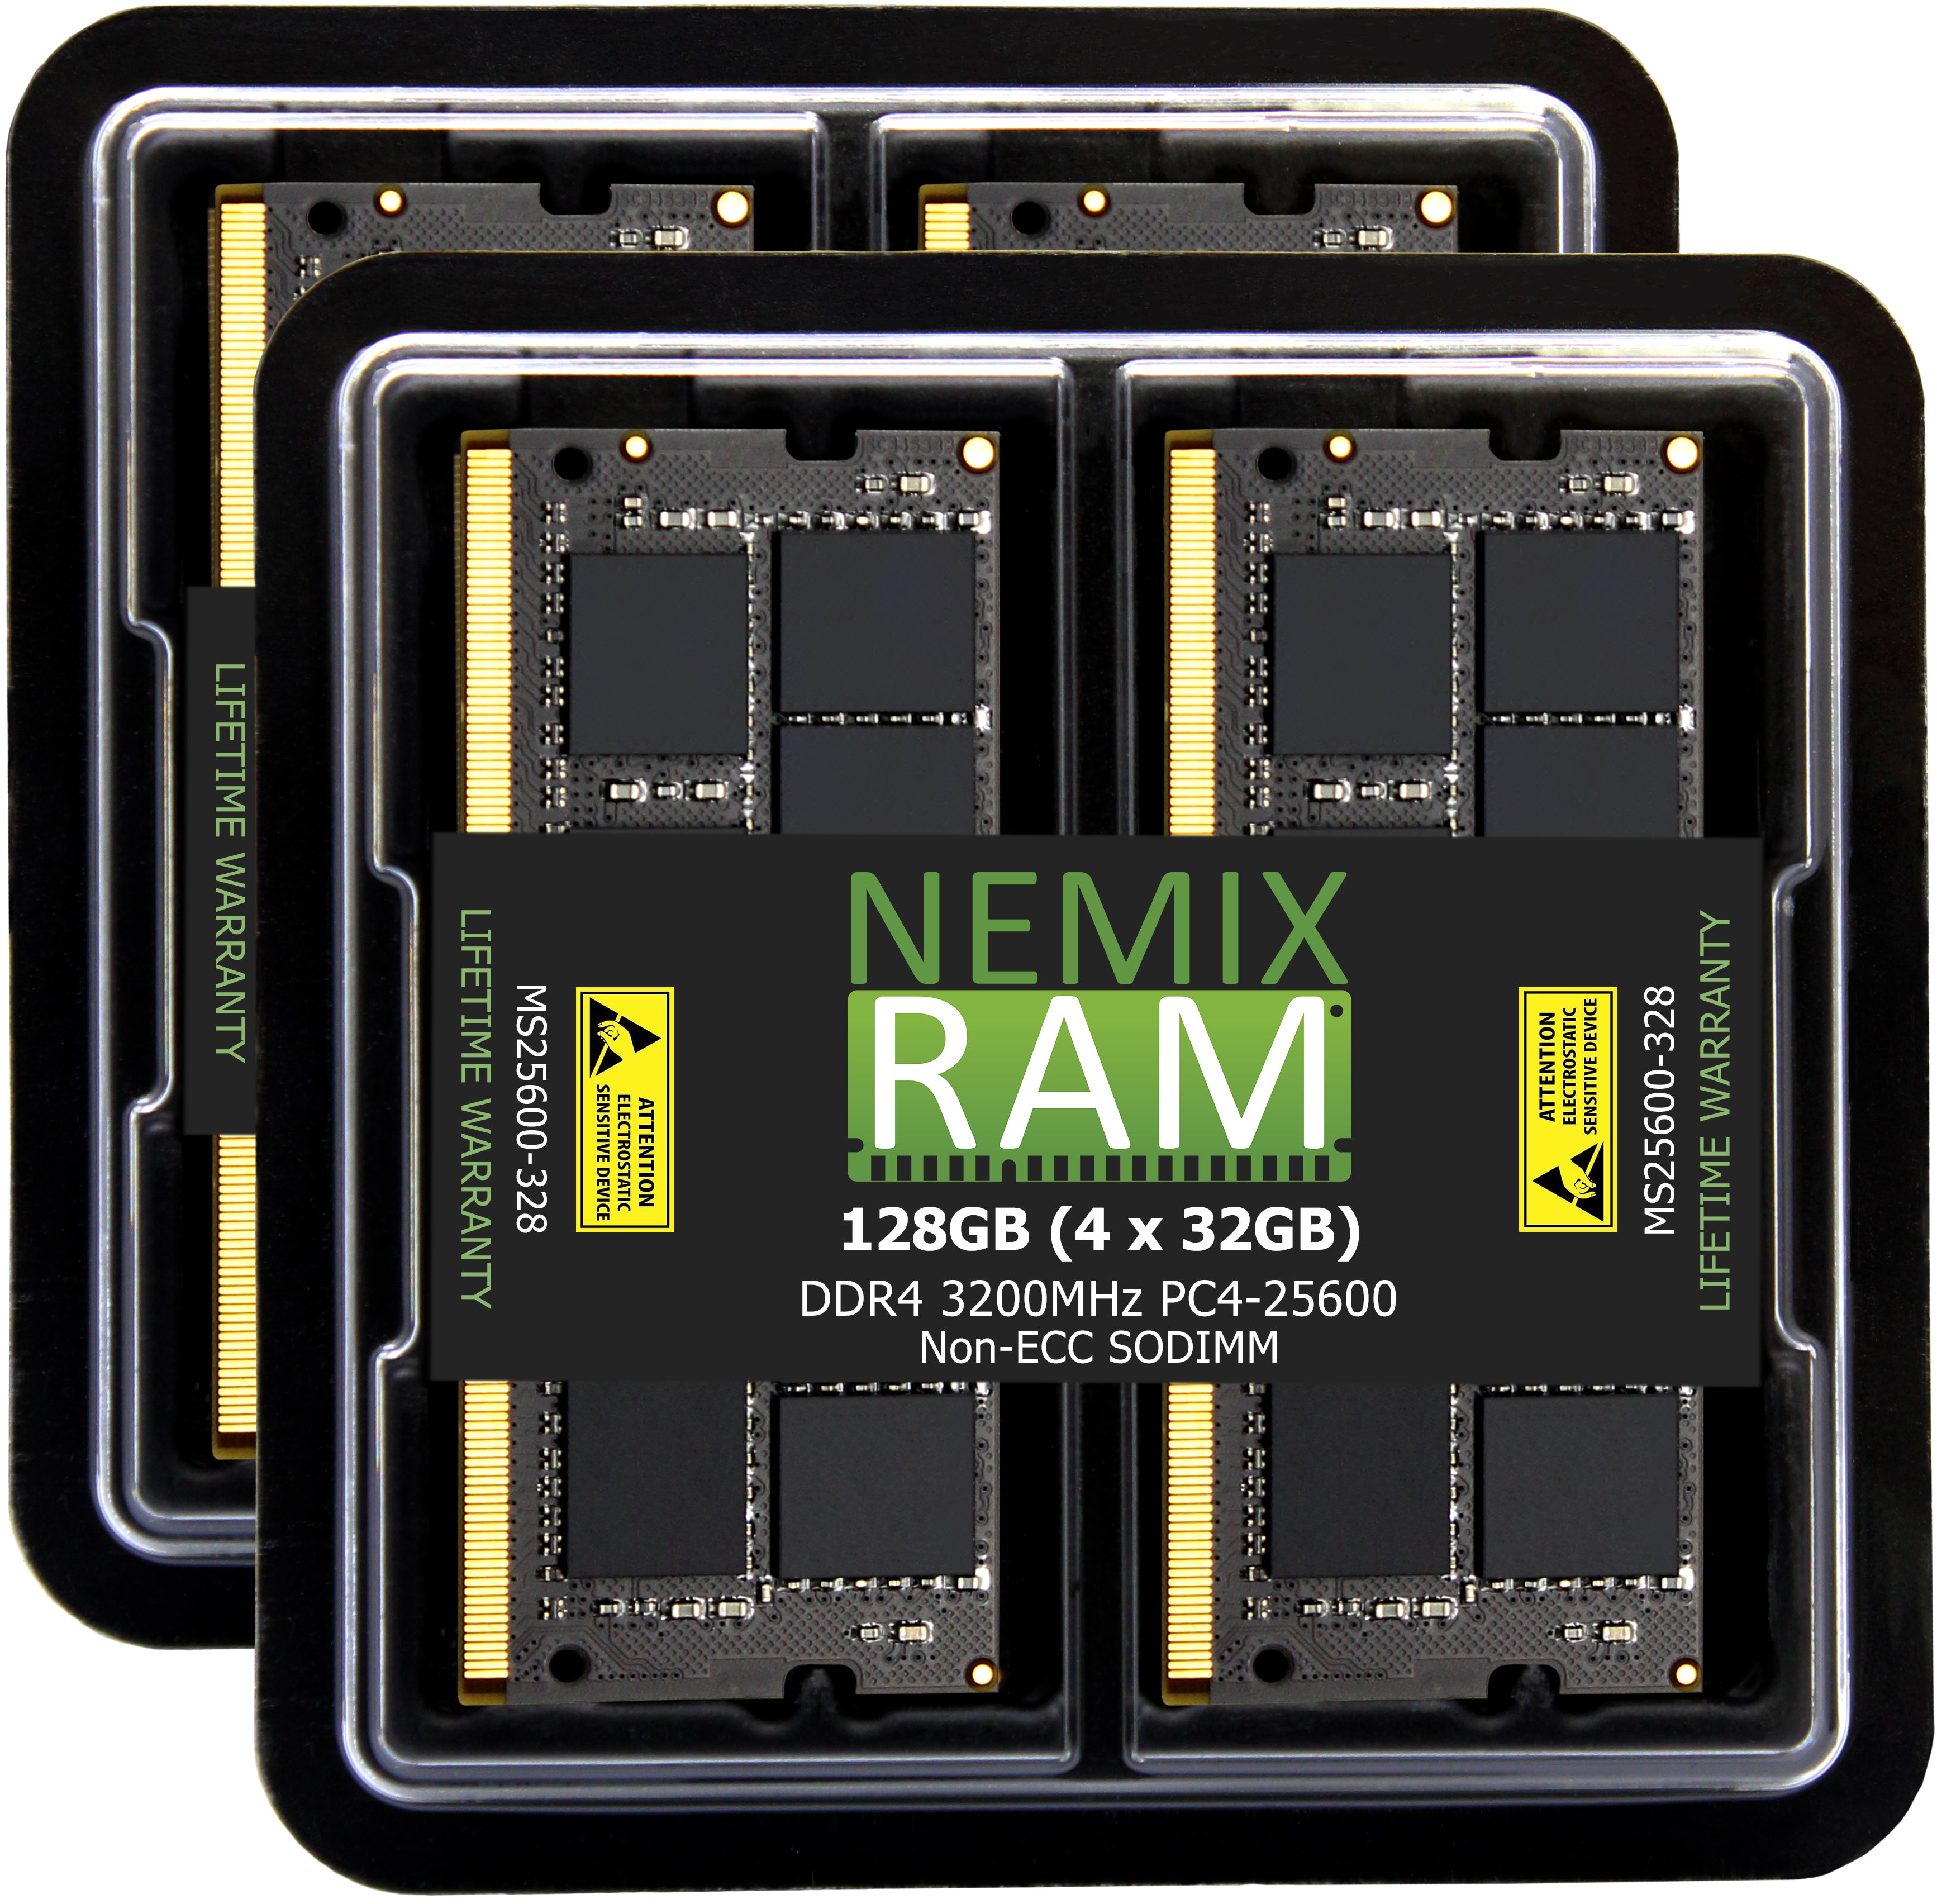 DDR4 3200MHZ PC4-25600 SODIMM 2RX8